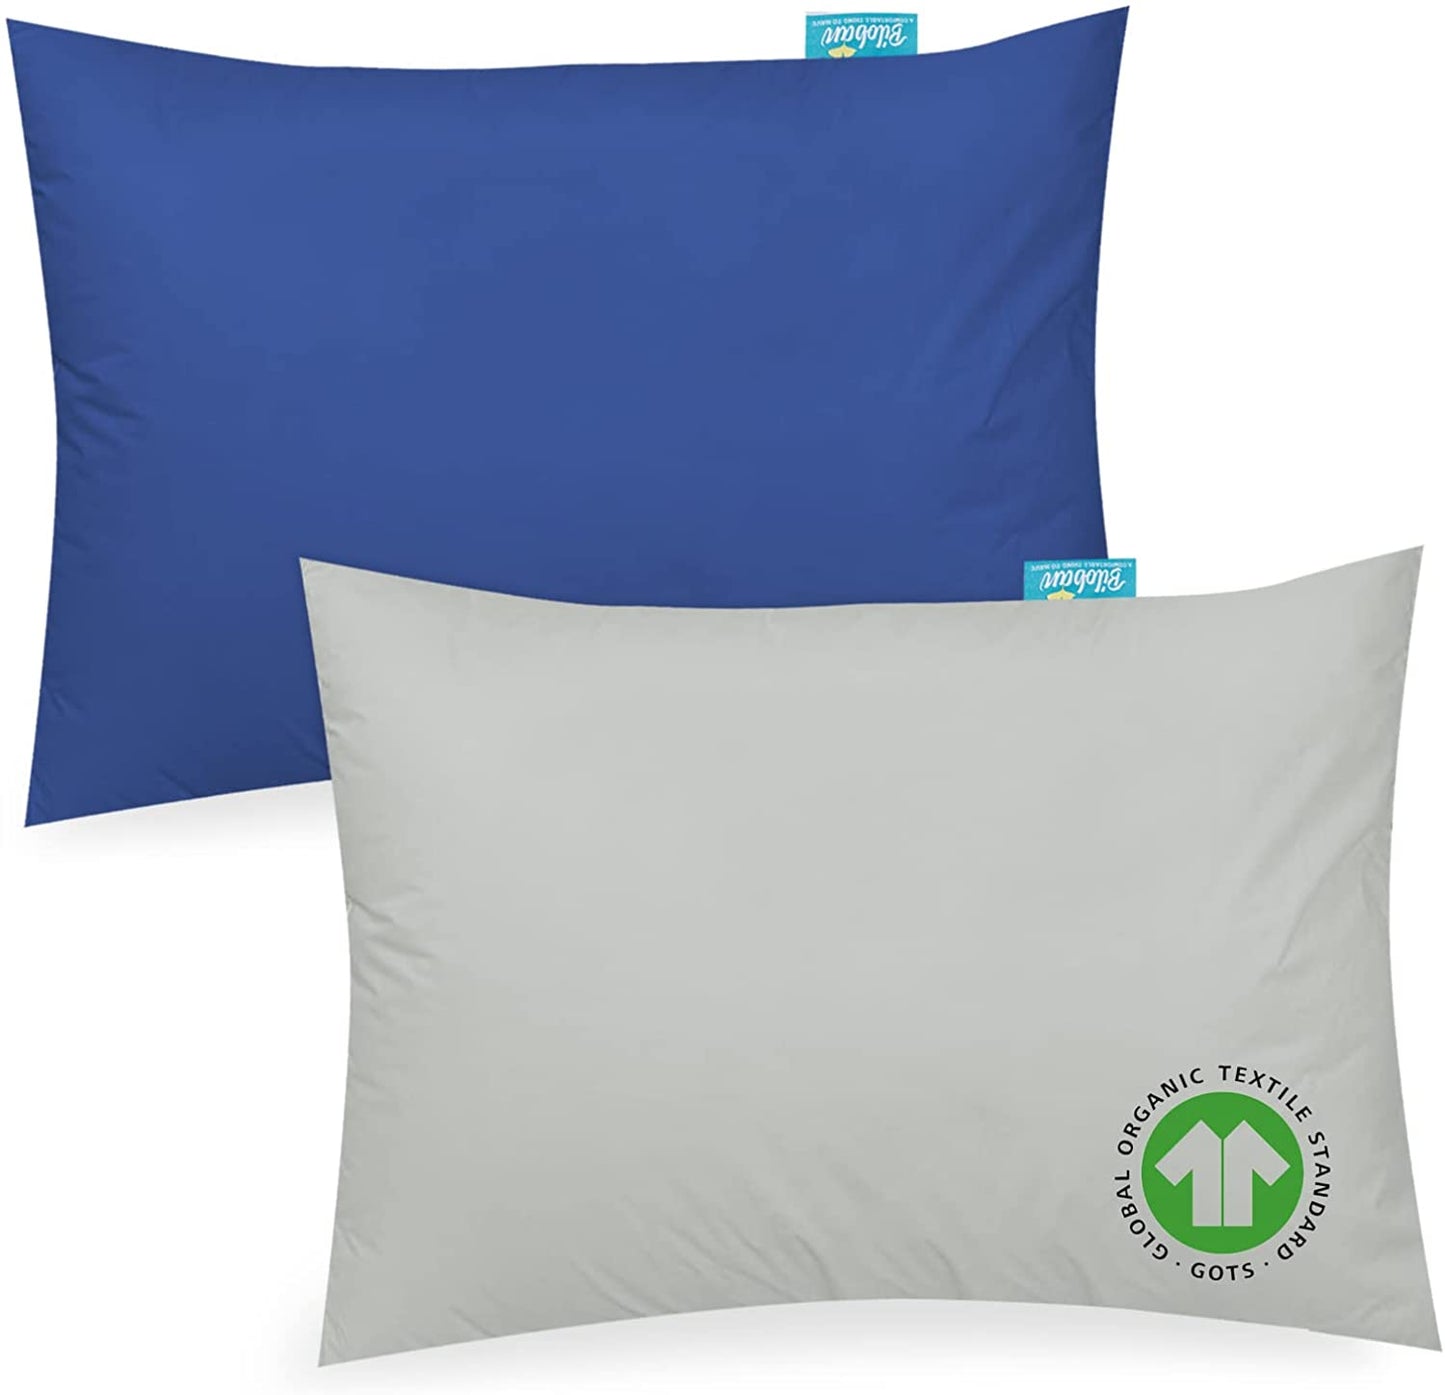 Toddler Pillowcase- 2 Pack, 100% Organic Cotton, 12" x 16", 13" x 18", 14" x 19", Gray & Navy Blue